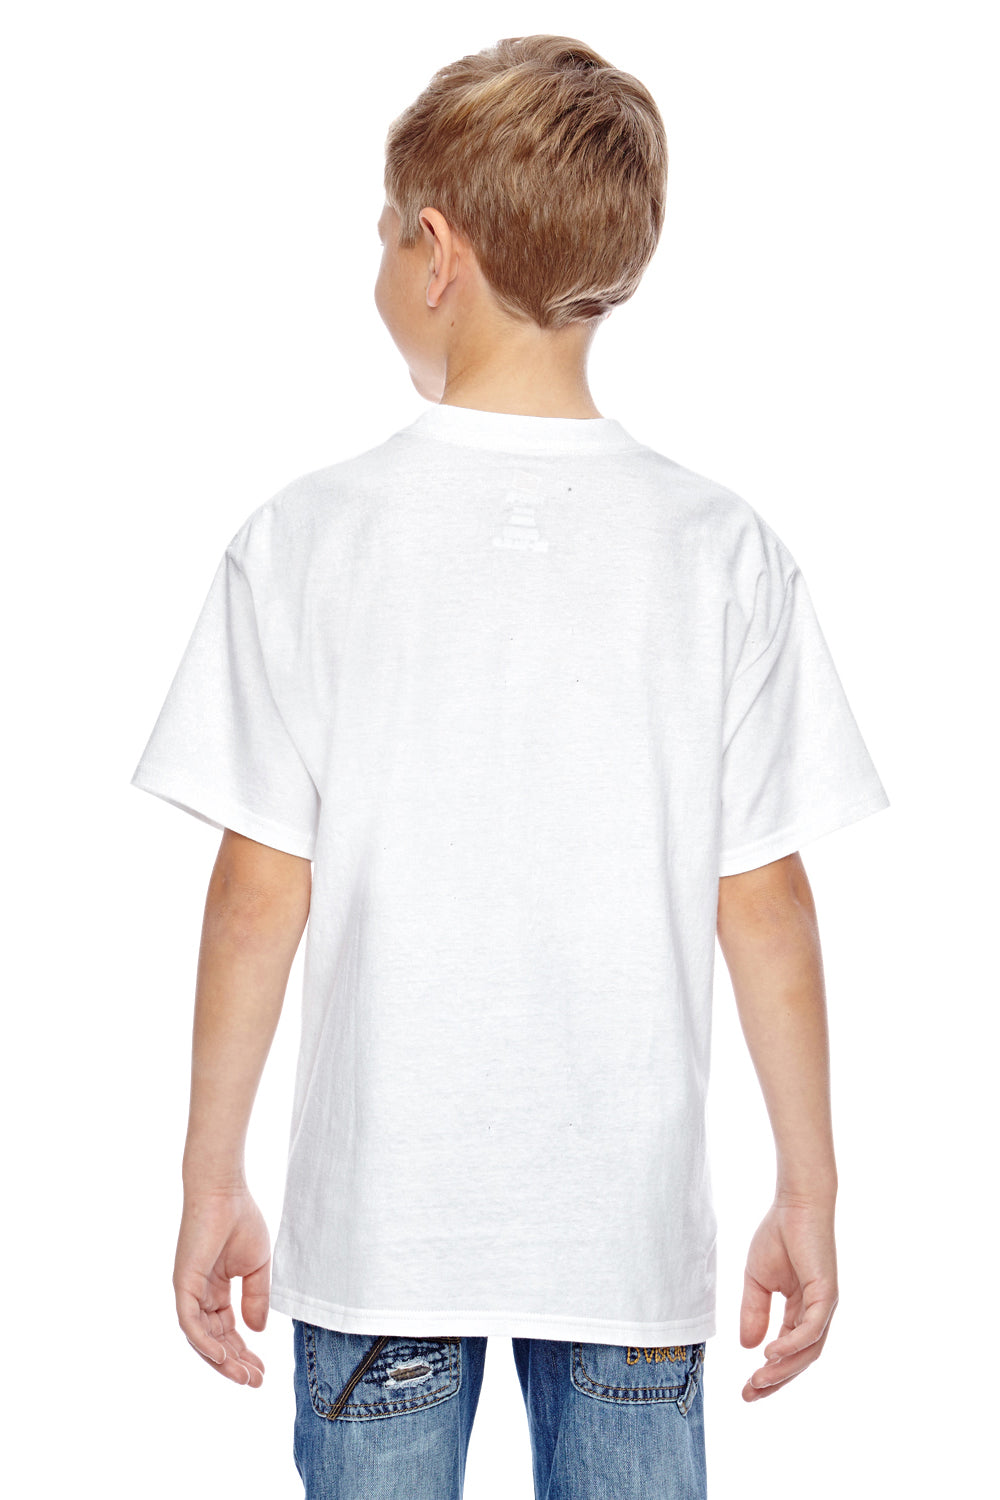 Hanes 498Y Youth Nano-T Short Sleeve Crewneck T-Shirt White Back